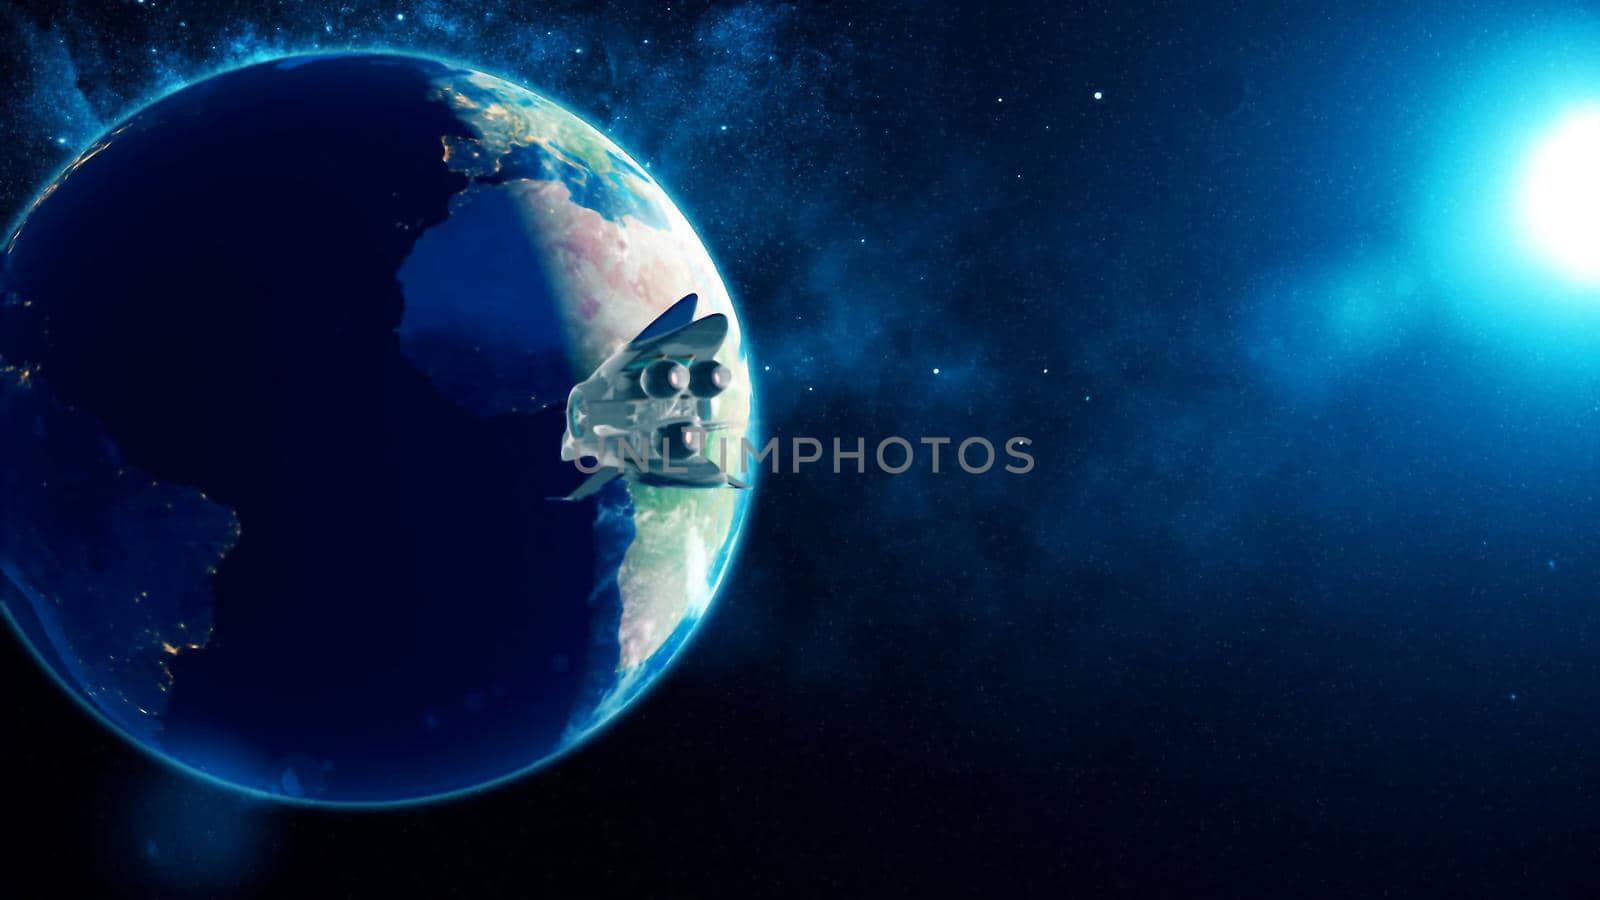 Alien spacecraft flies past Earth 3D rendering by designprojects